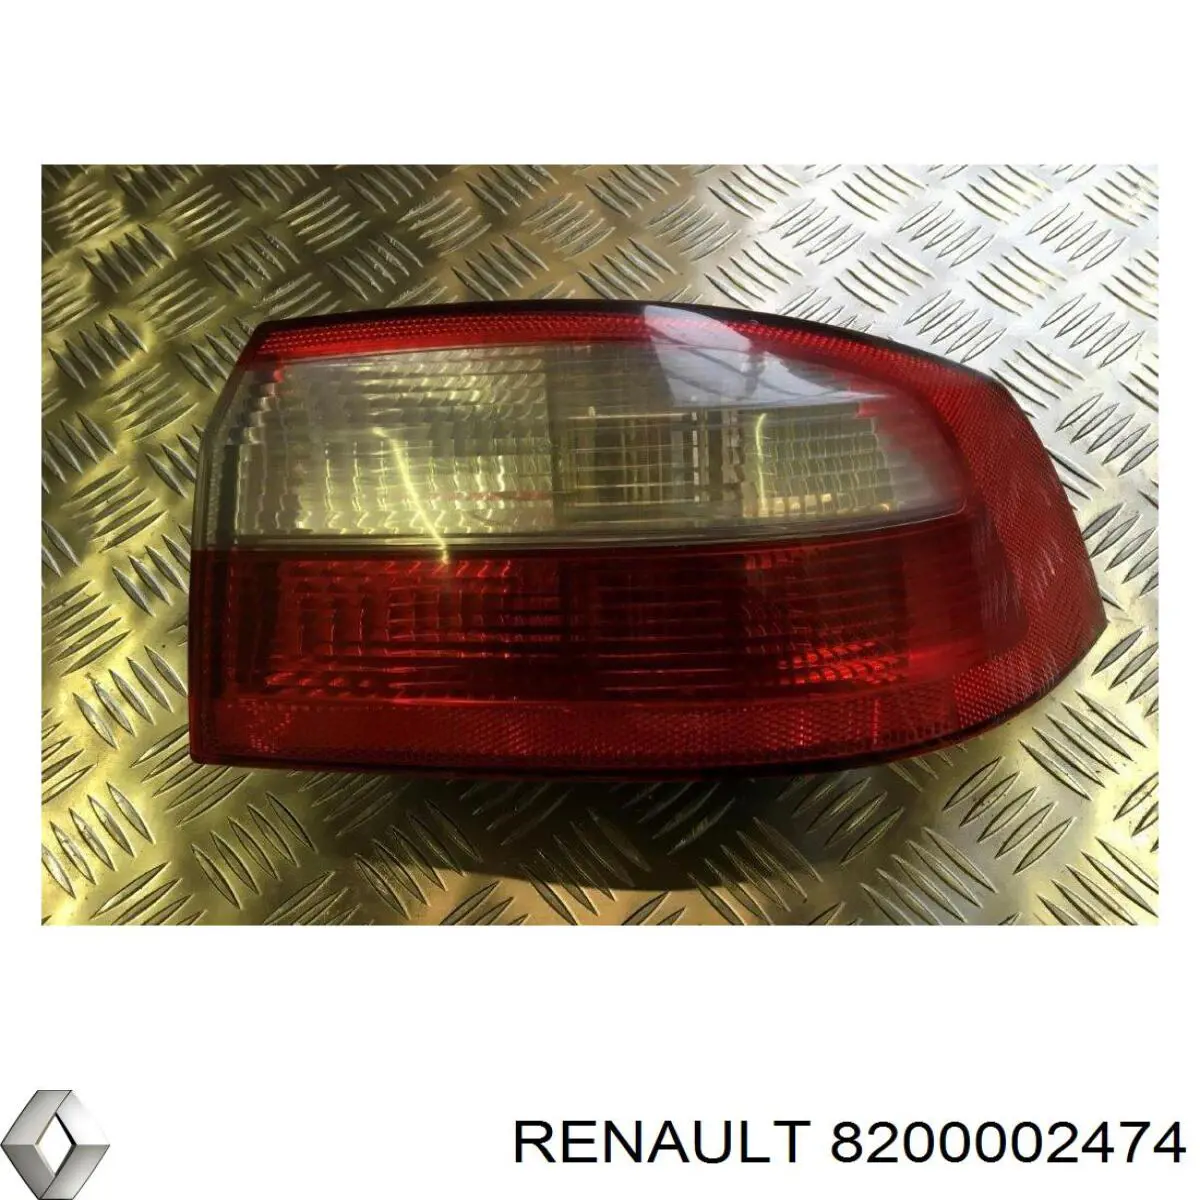 8200002474 Renault (RVI) lanterna traseira direita externa